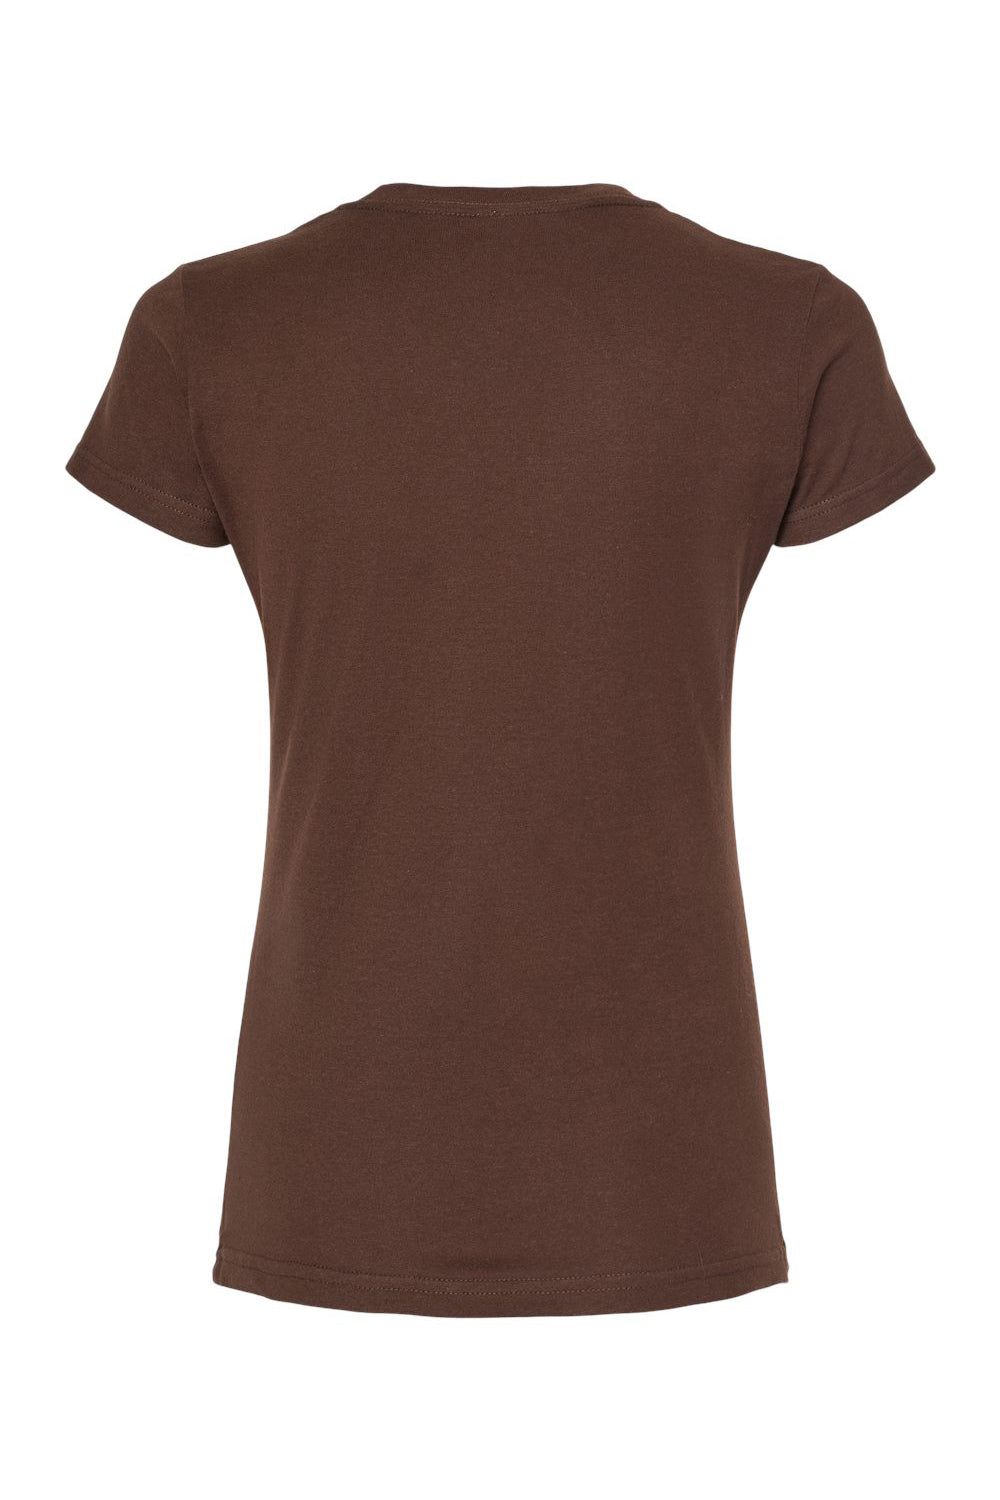 Tultex 213 Womens Fine Jersey Slim Fit Short Sleeve Crewneck T-Shirt Brown Flat Back